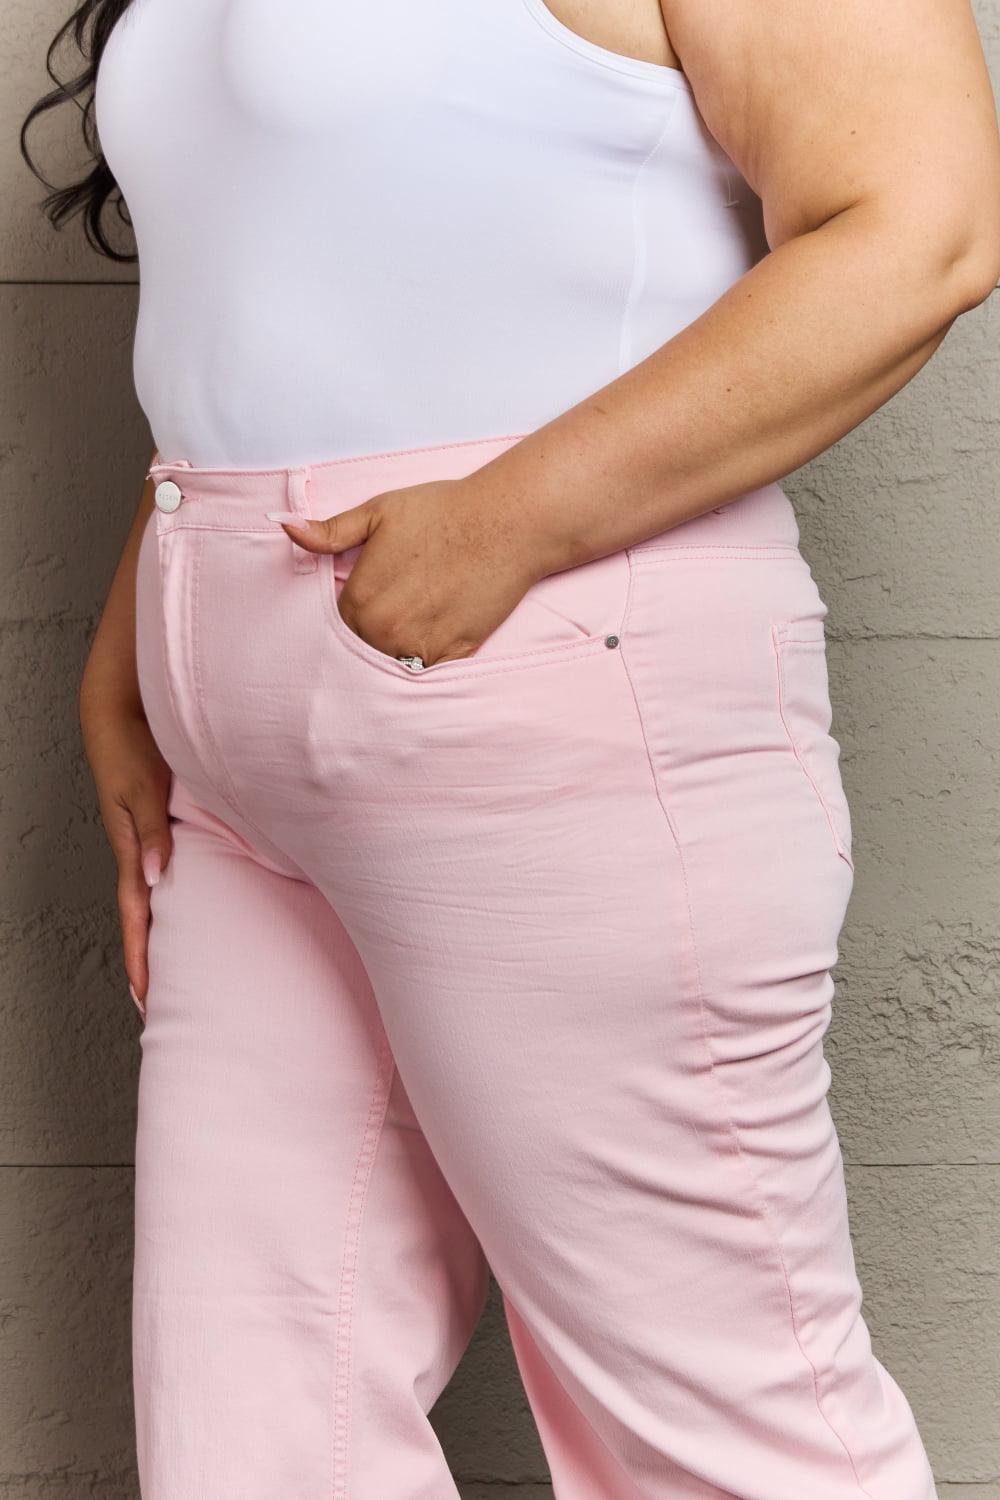 RISEN Raelene Full Size High Waist Wide Leg Jeans in Light Pink - Closet of Ren